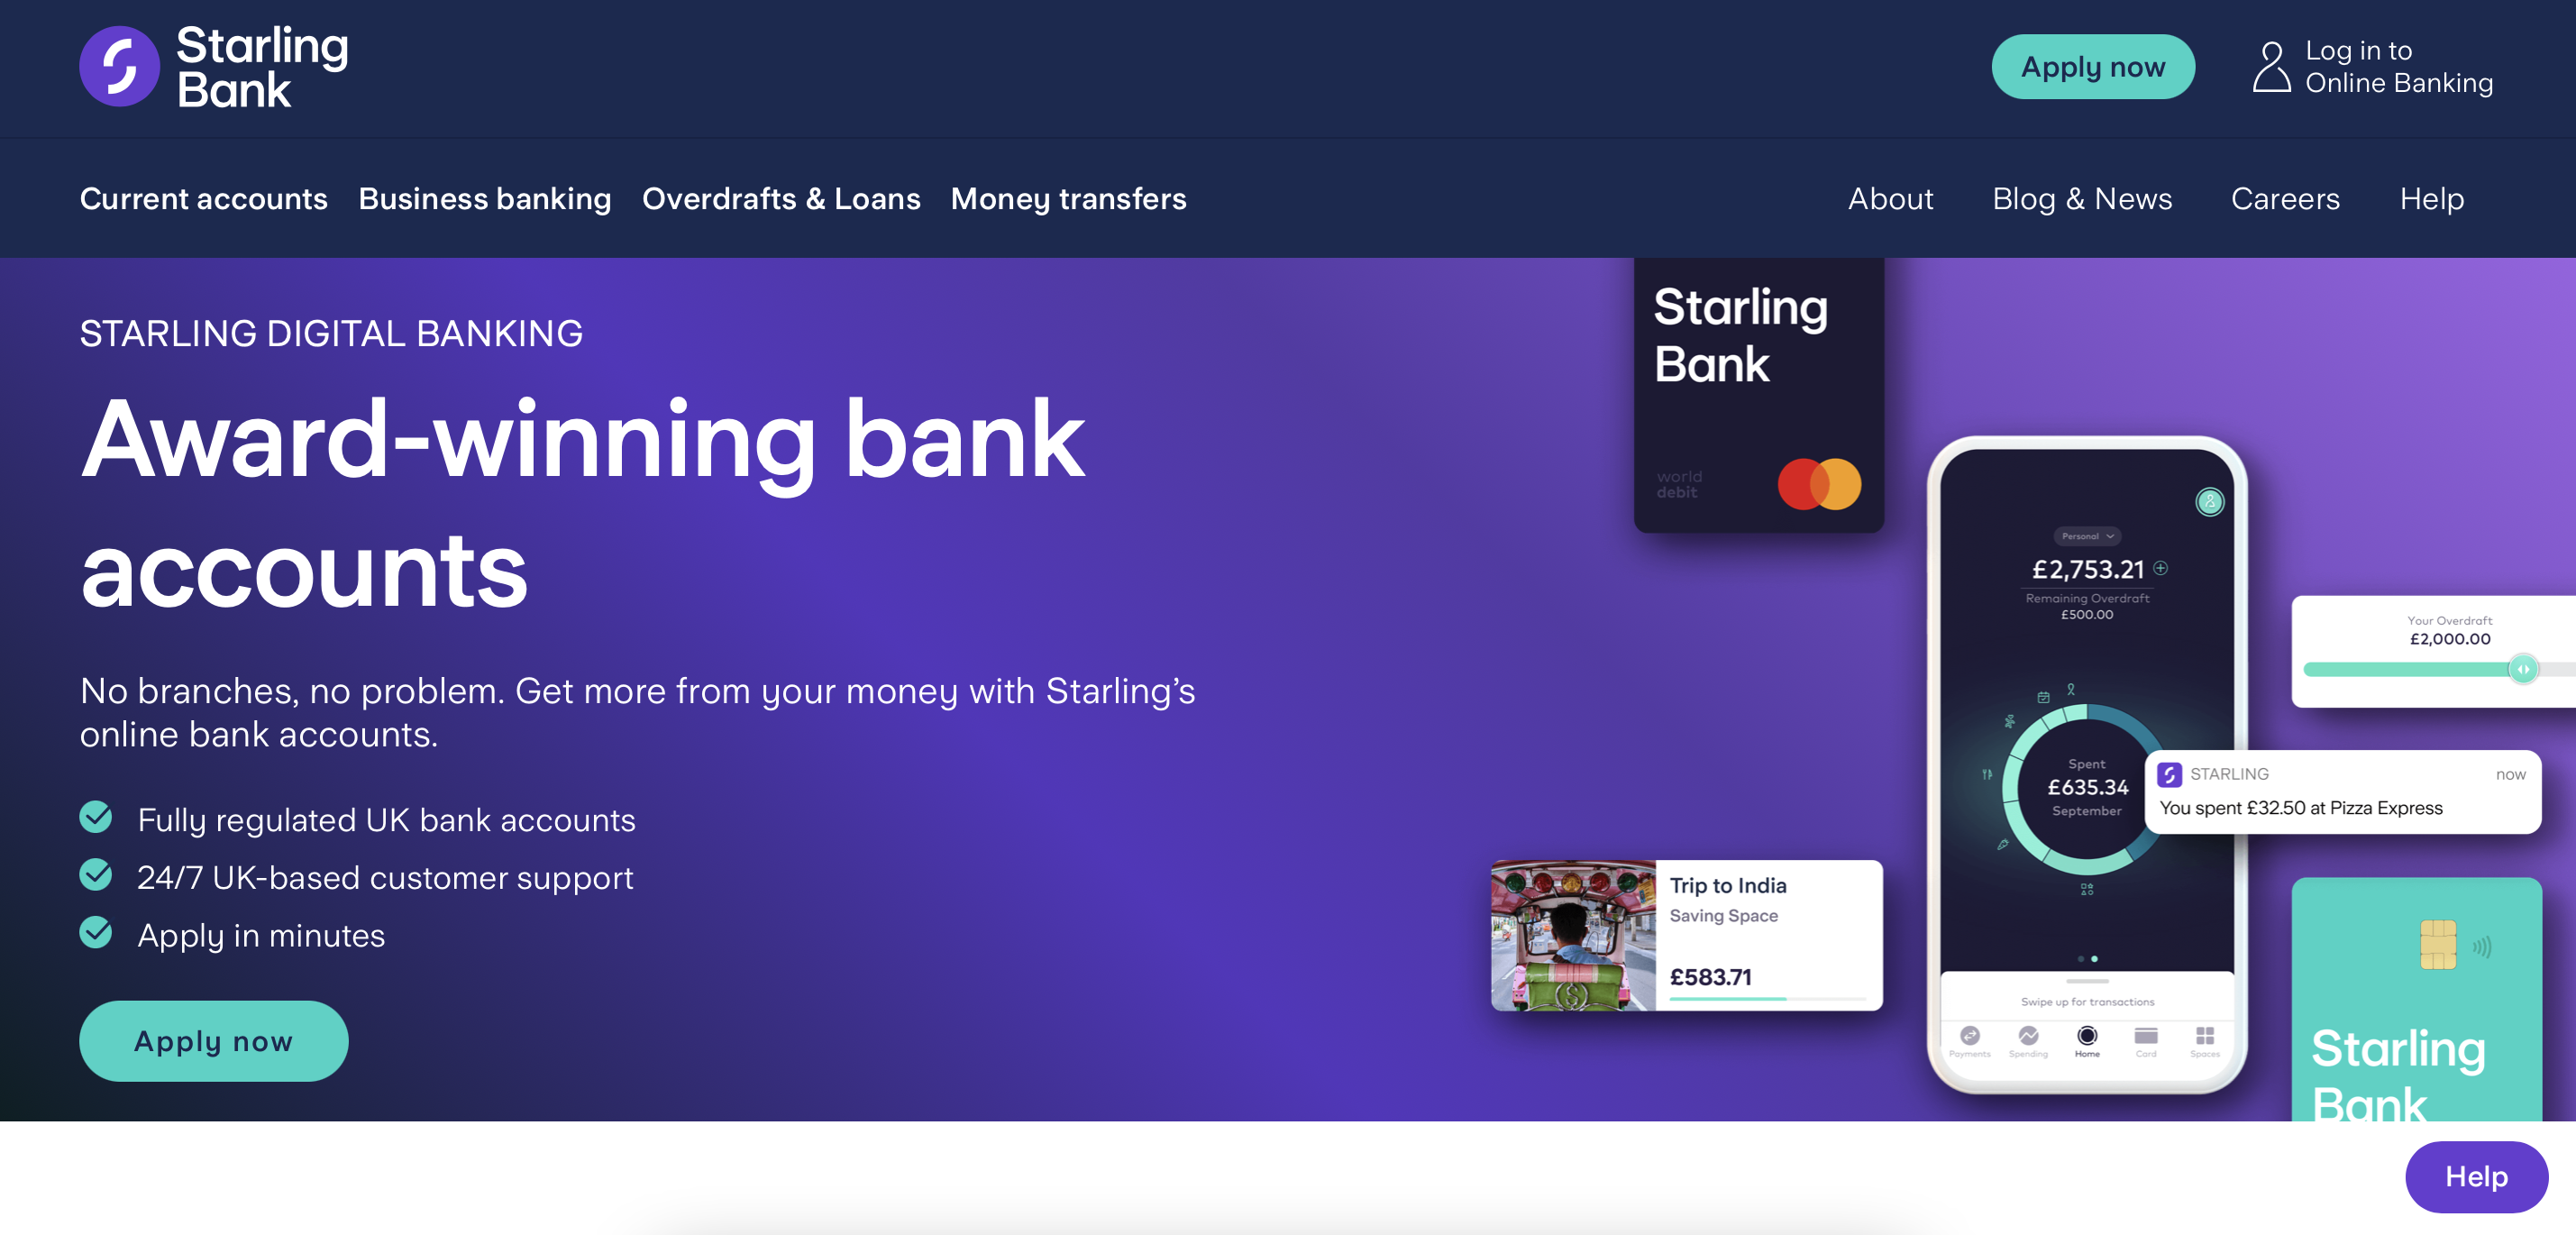 Starling Bank, a digital bank offering BaaS solutions.